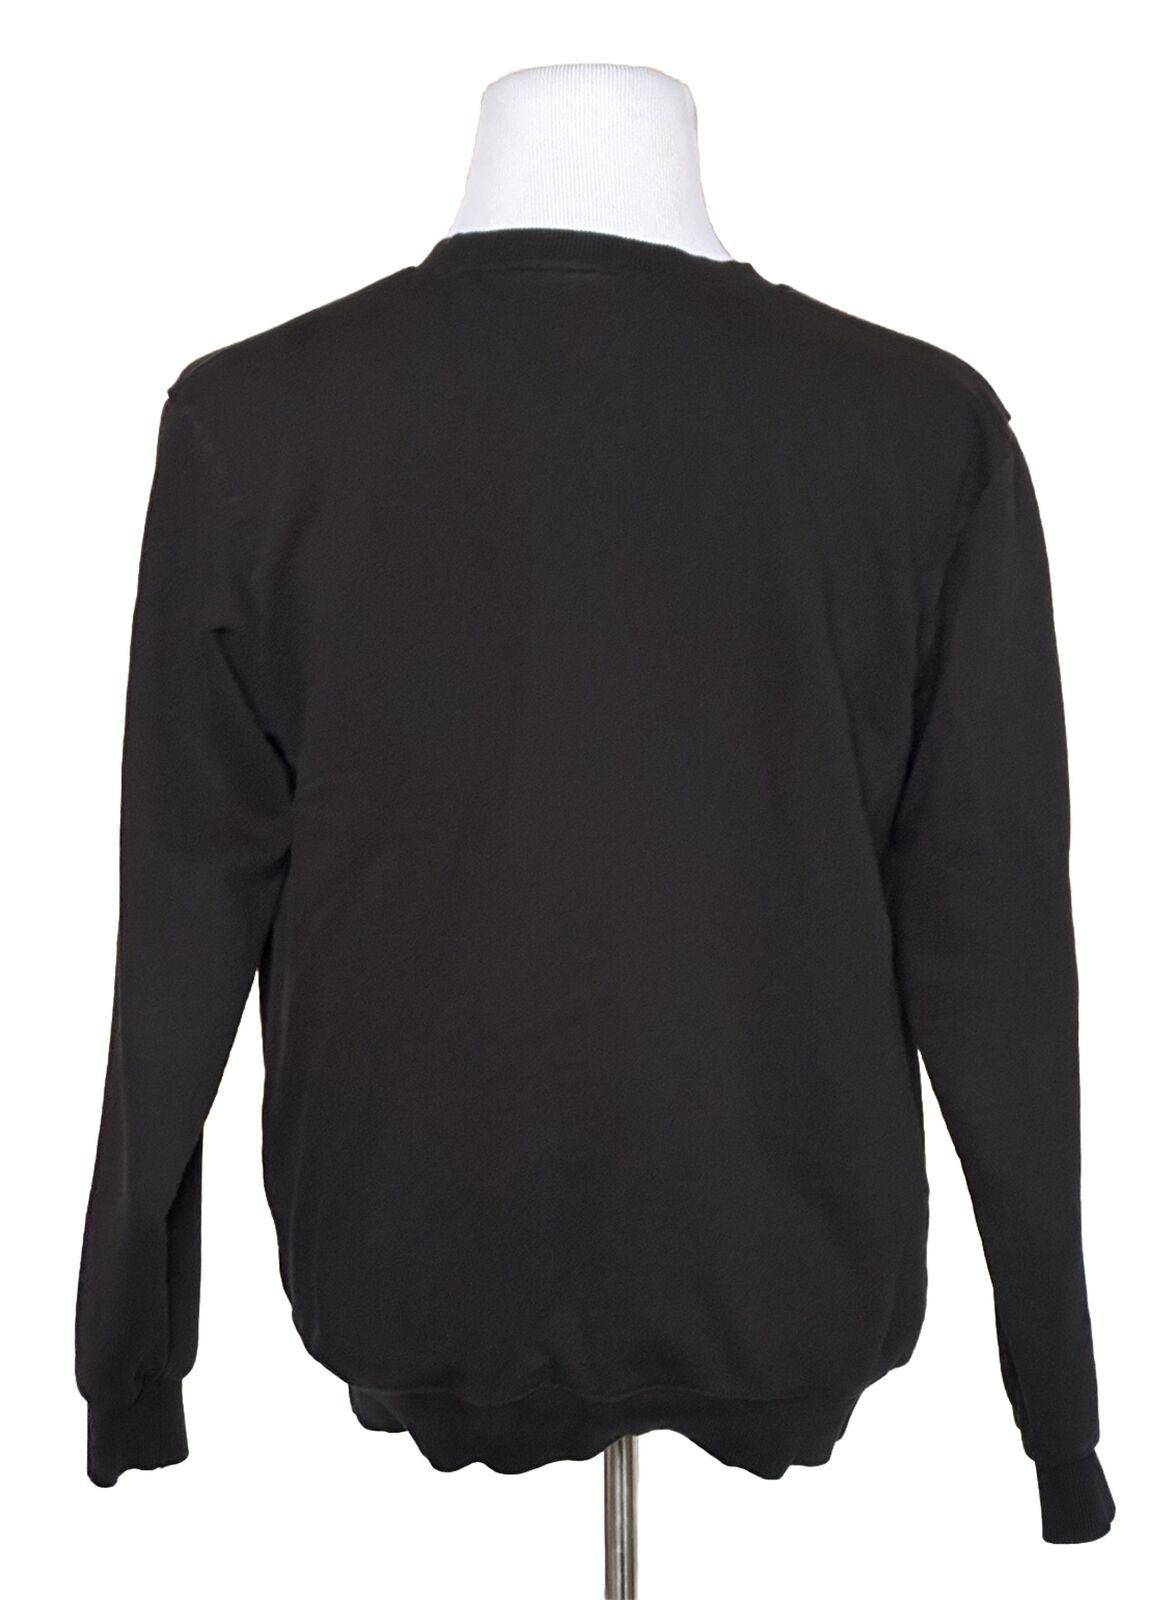 Roberto Cavalli Cotton Black Logo Sweater XL Made in Italy